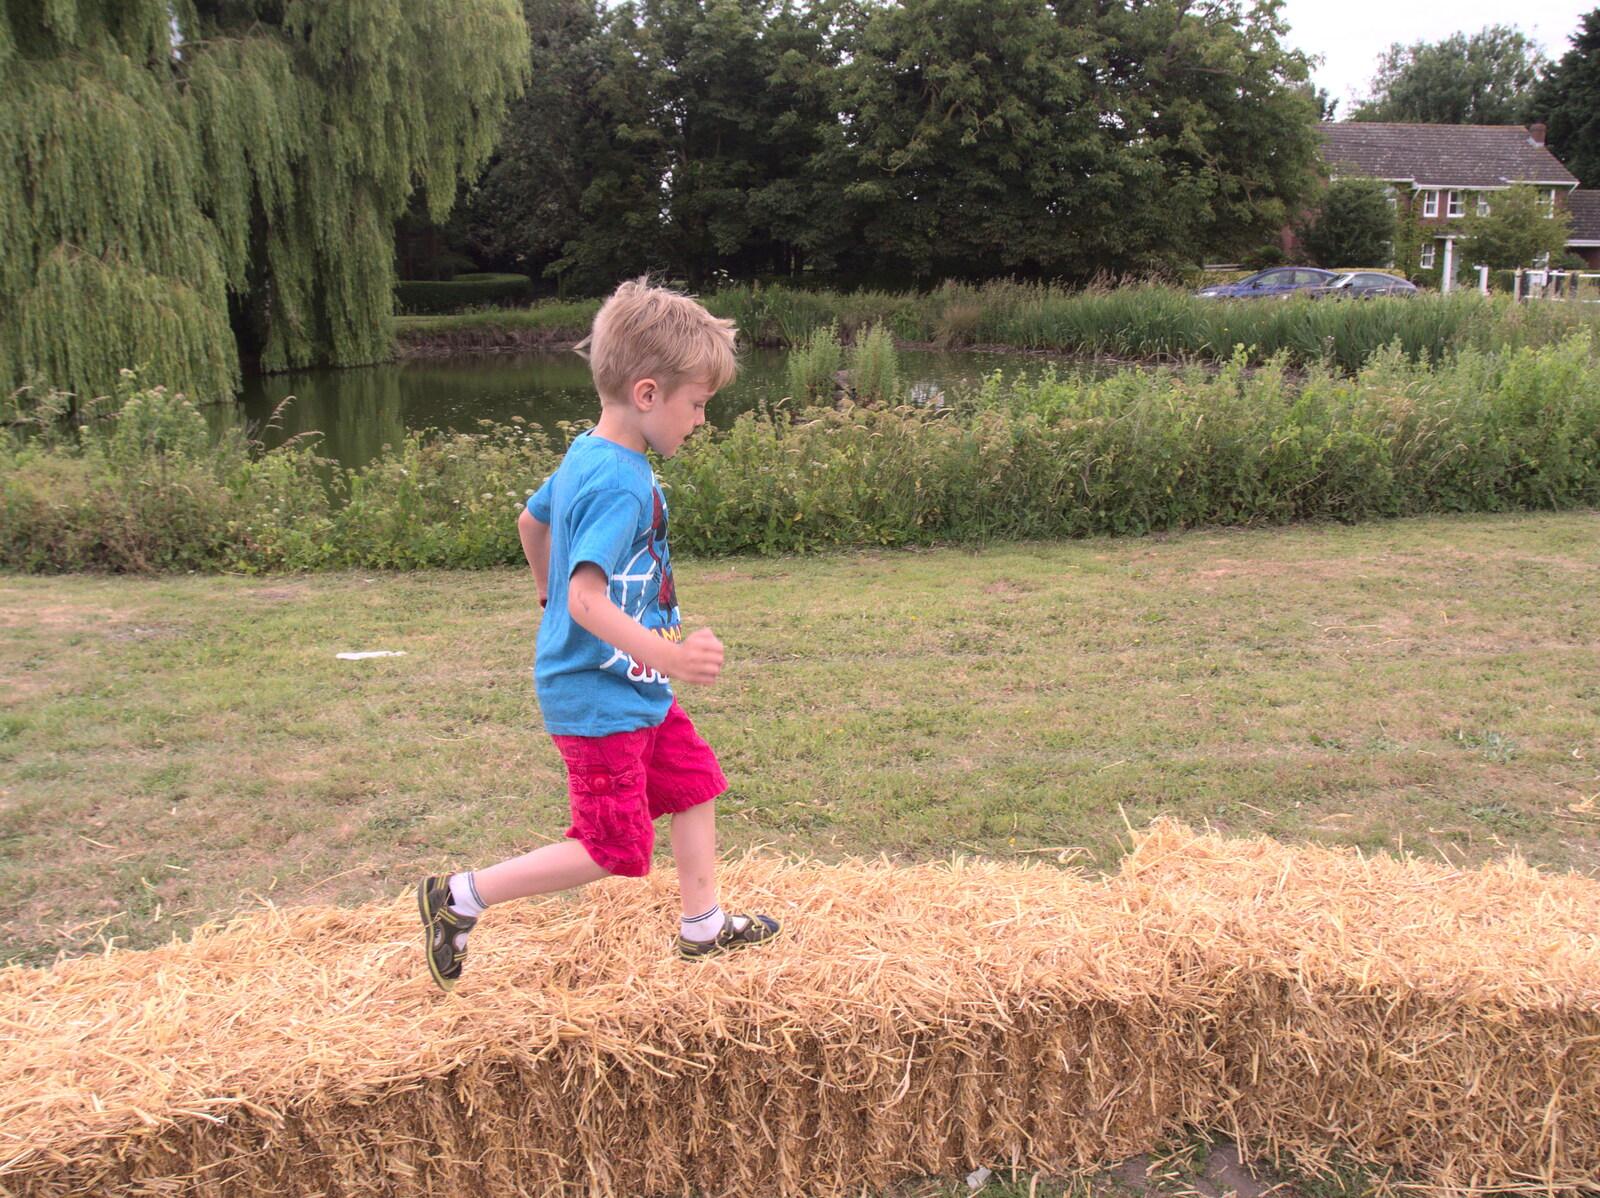 Harry runs around on bales from Thrandeston Pig, Little Green, Thrandeston, Suffolk - 25th June 2017